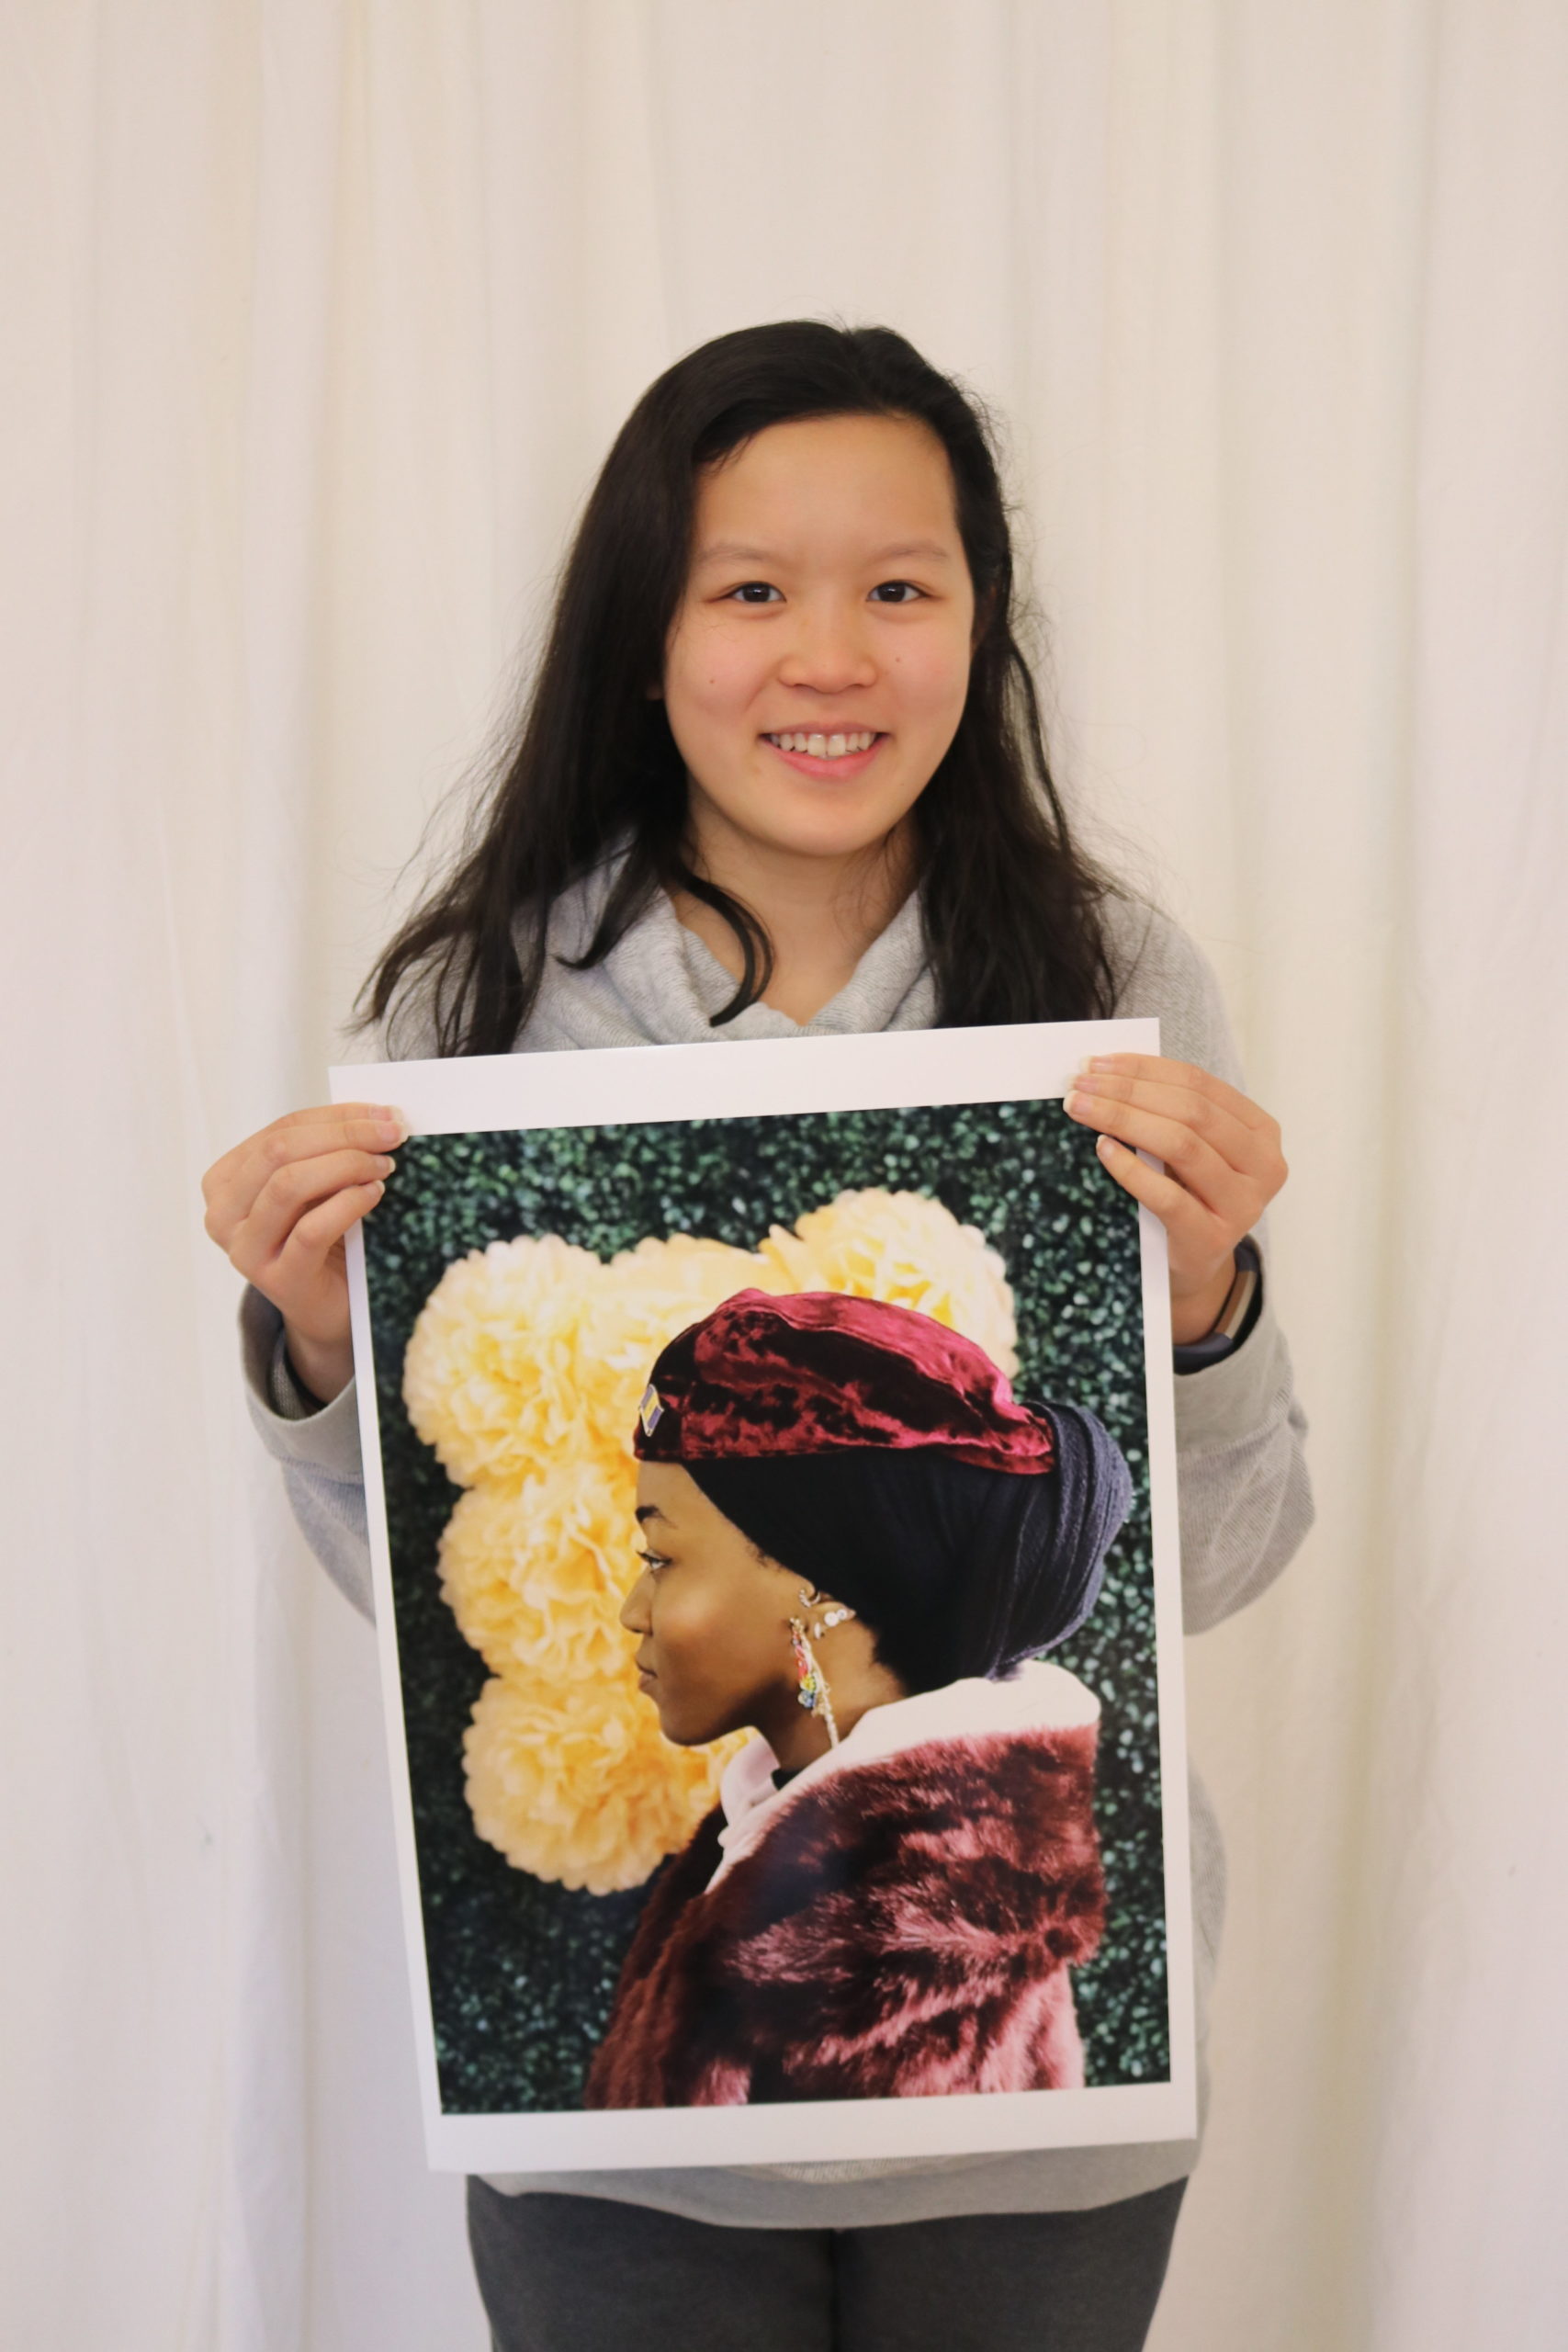 National Gold Key Award recipient Kiele Hwee with her award-winning photograph. (Photo courtesy of Great Neck Public Schools)